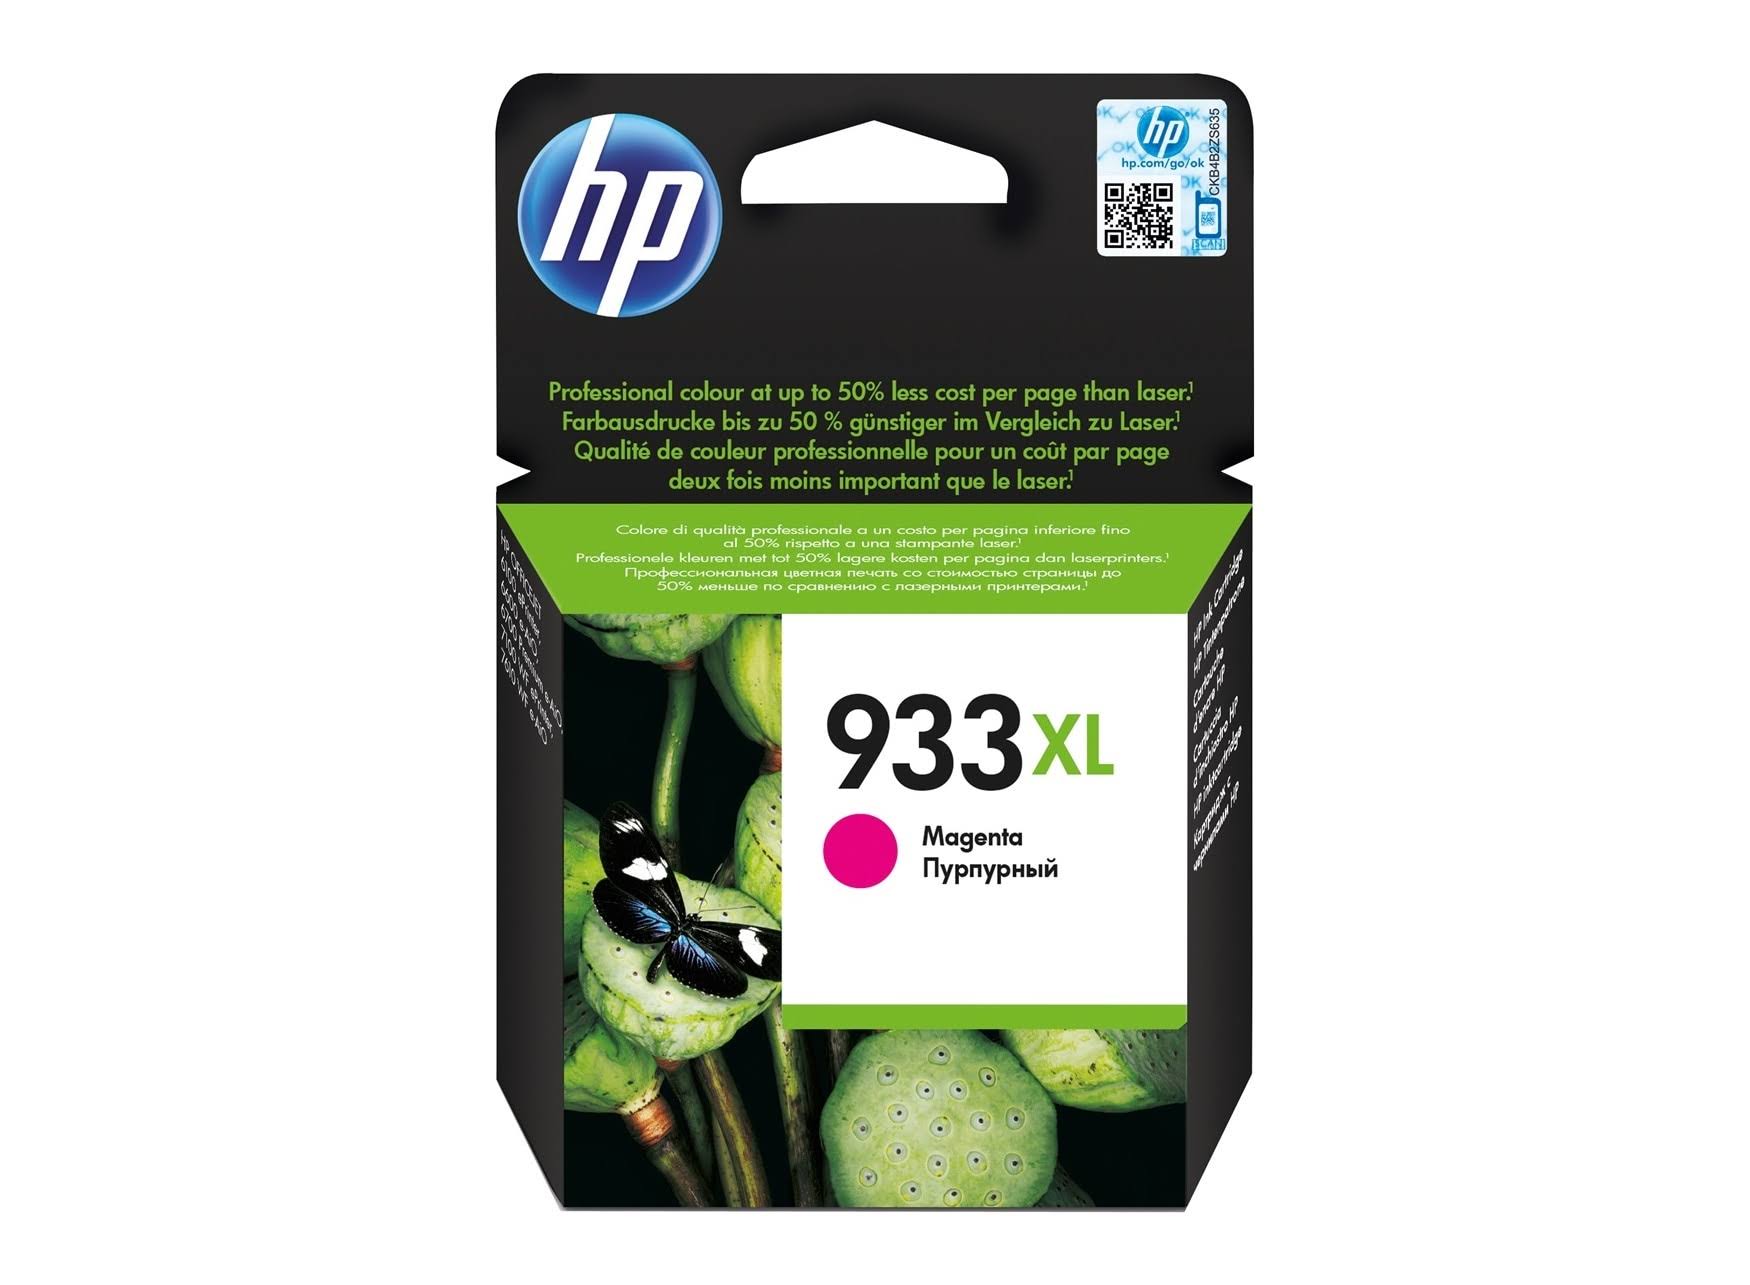 HP 933XL Printer Ink Cartridge - Magenta